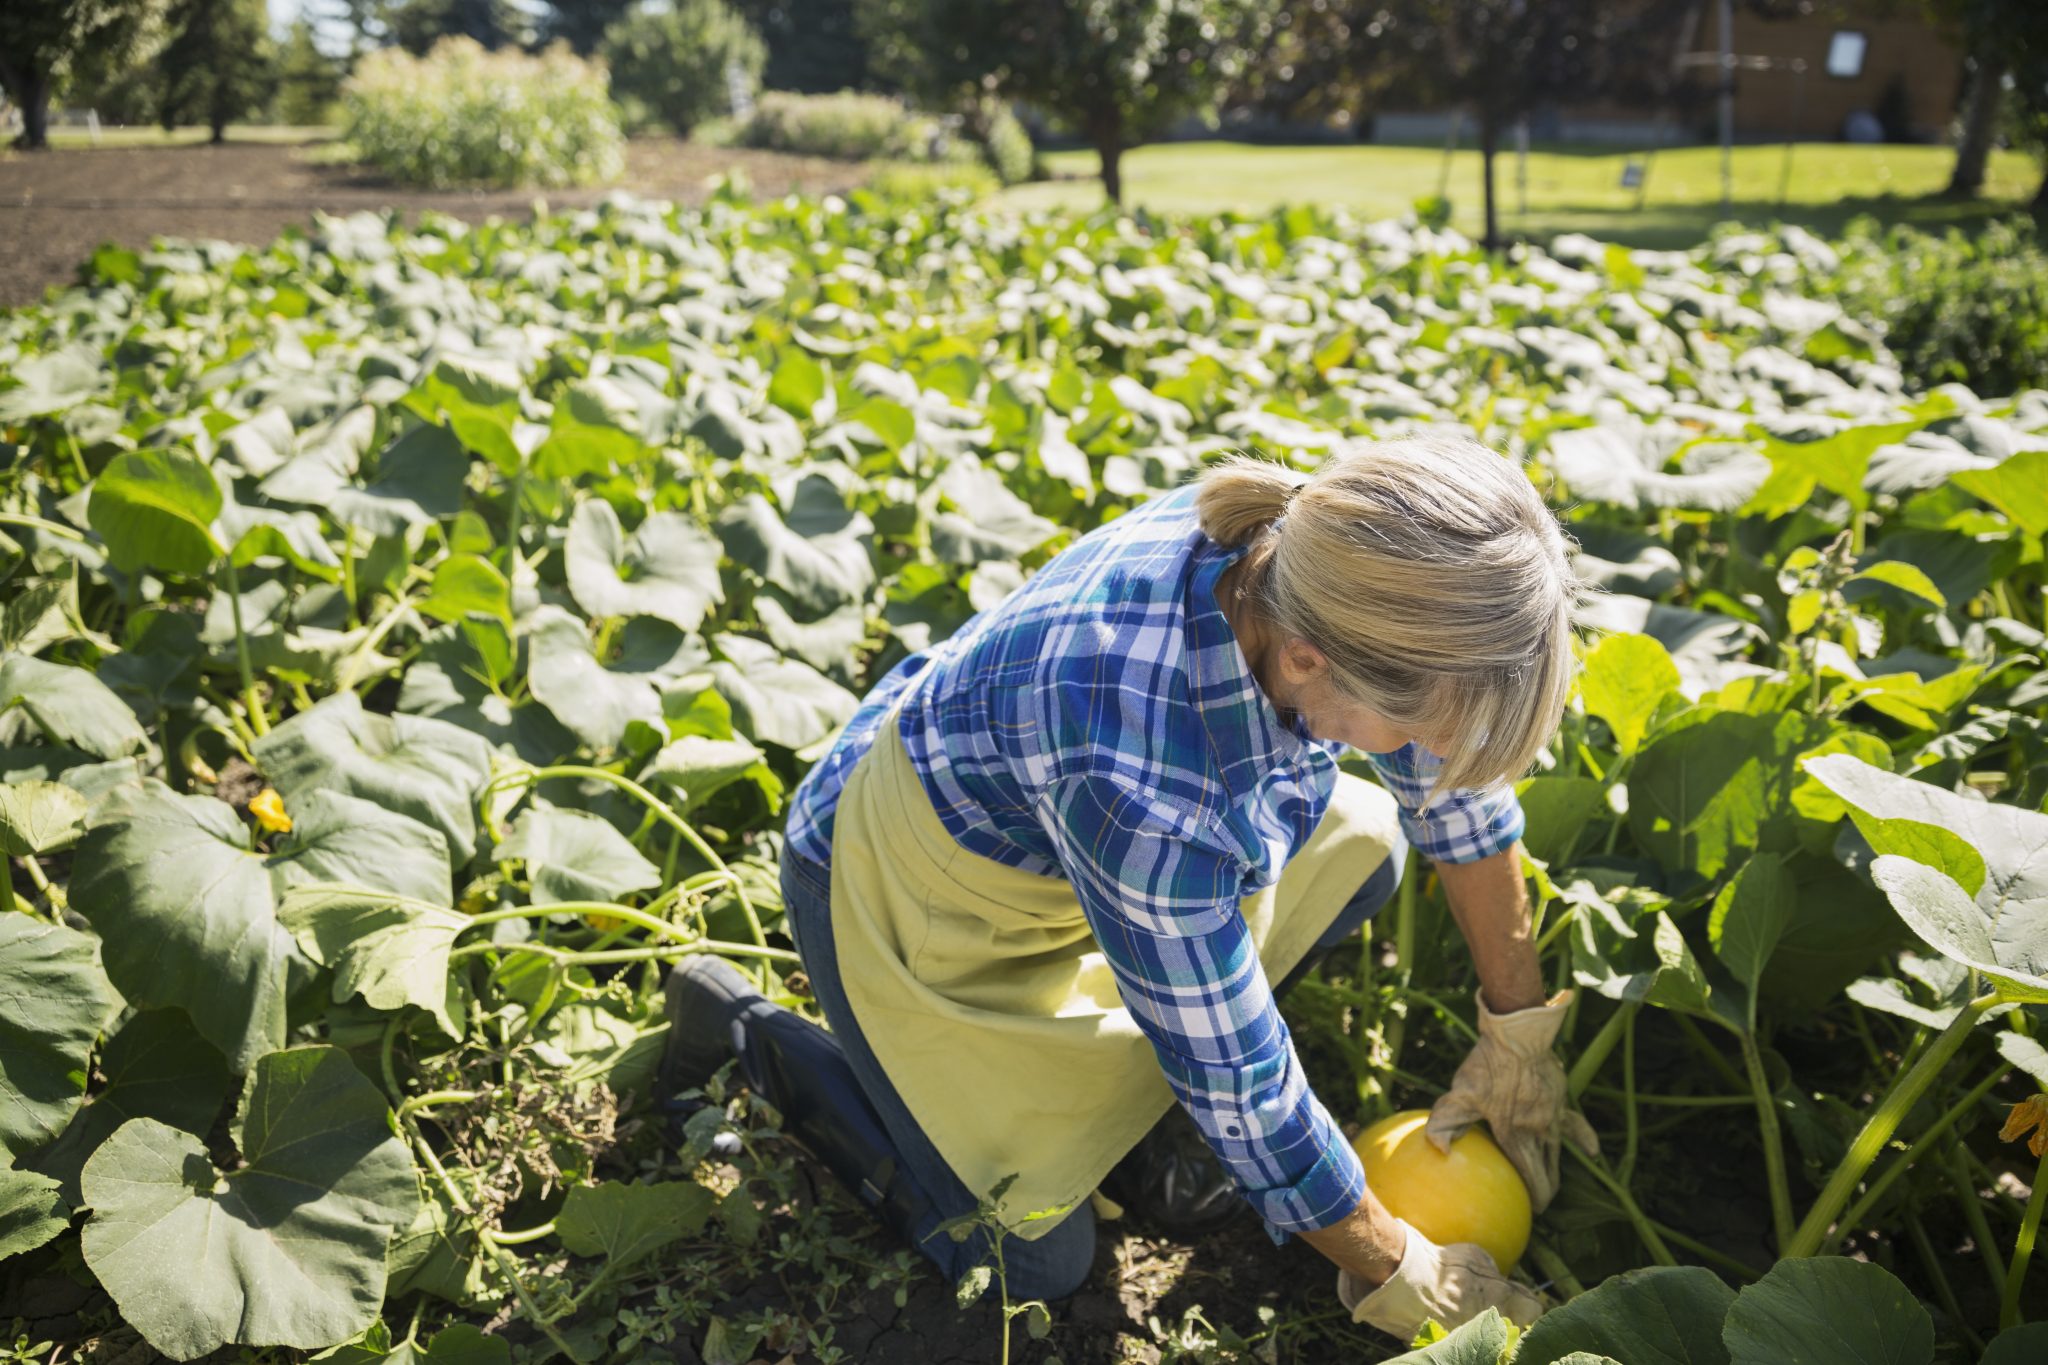 Woman harvesting squash in sunny vegetable garden